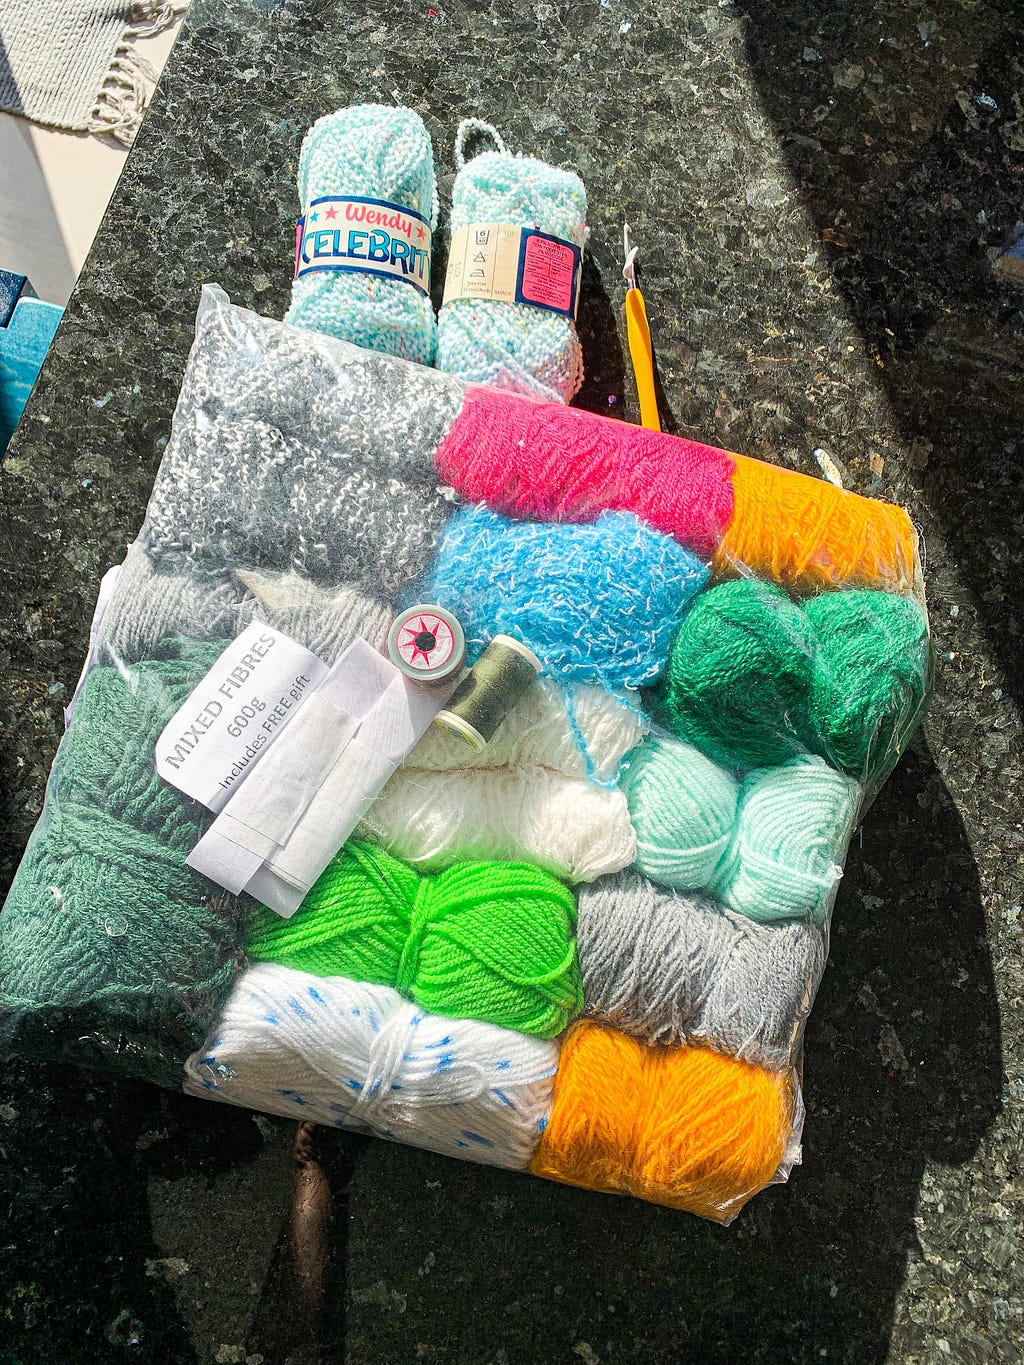 A bag of crotcheting yarn.